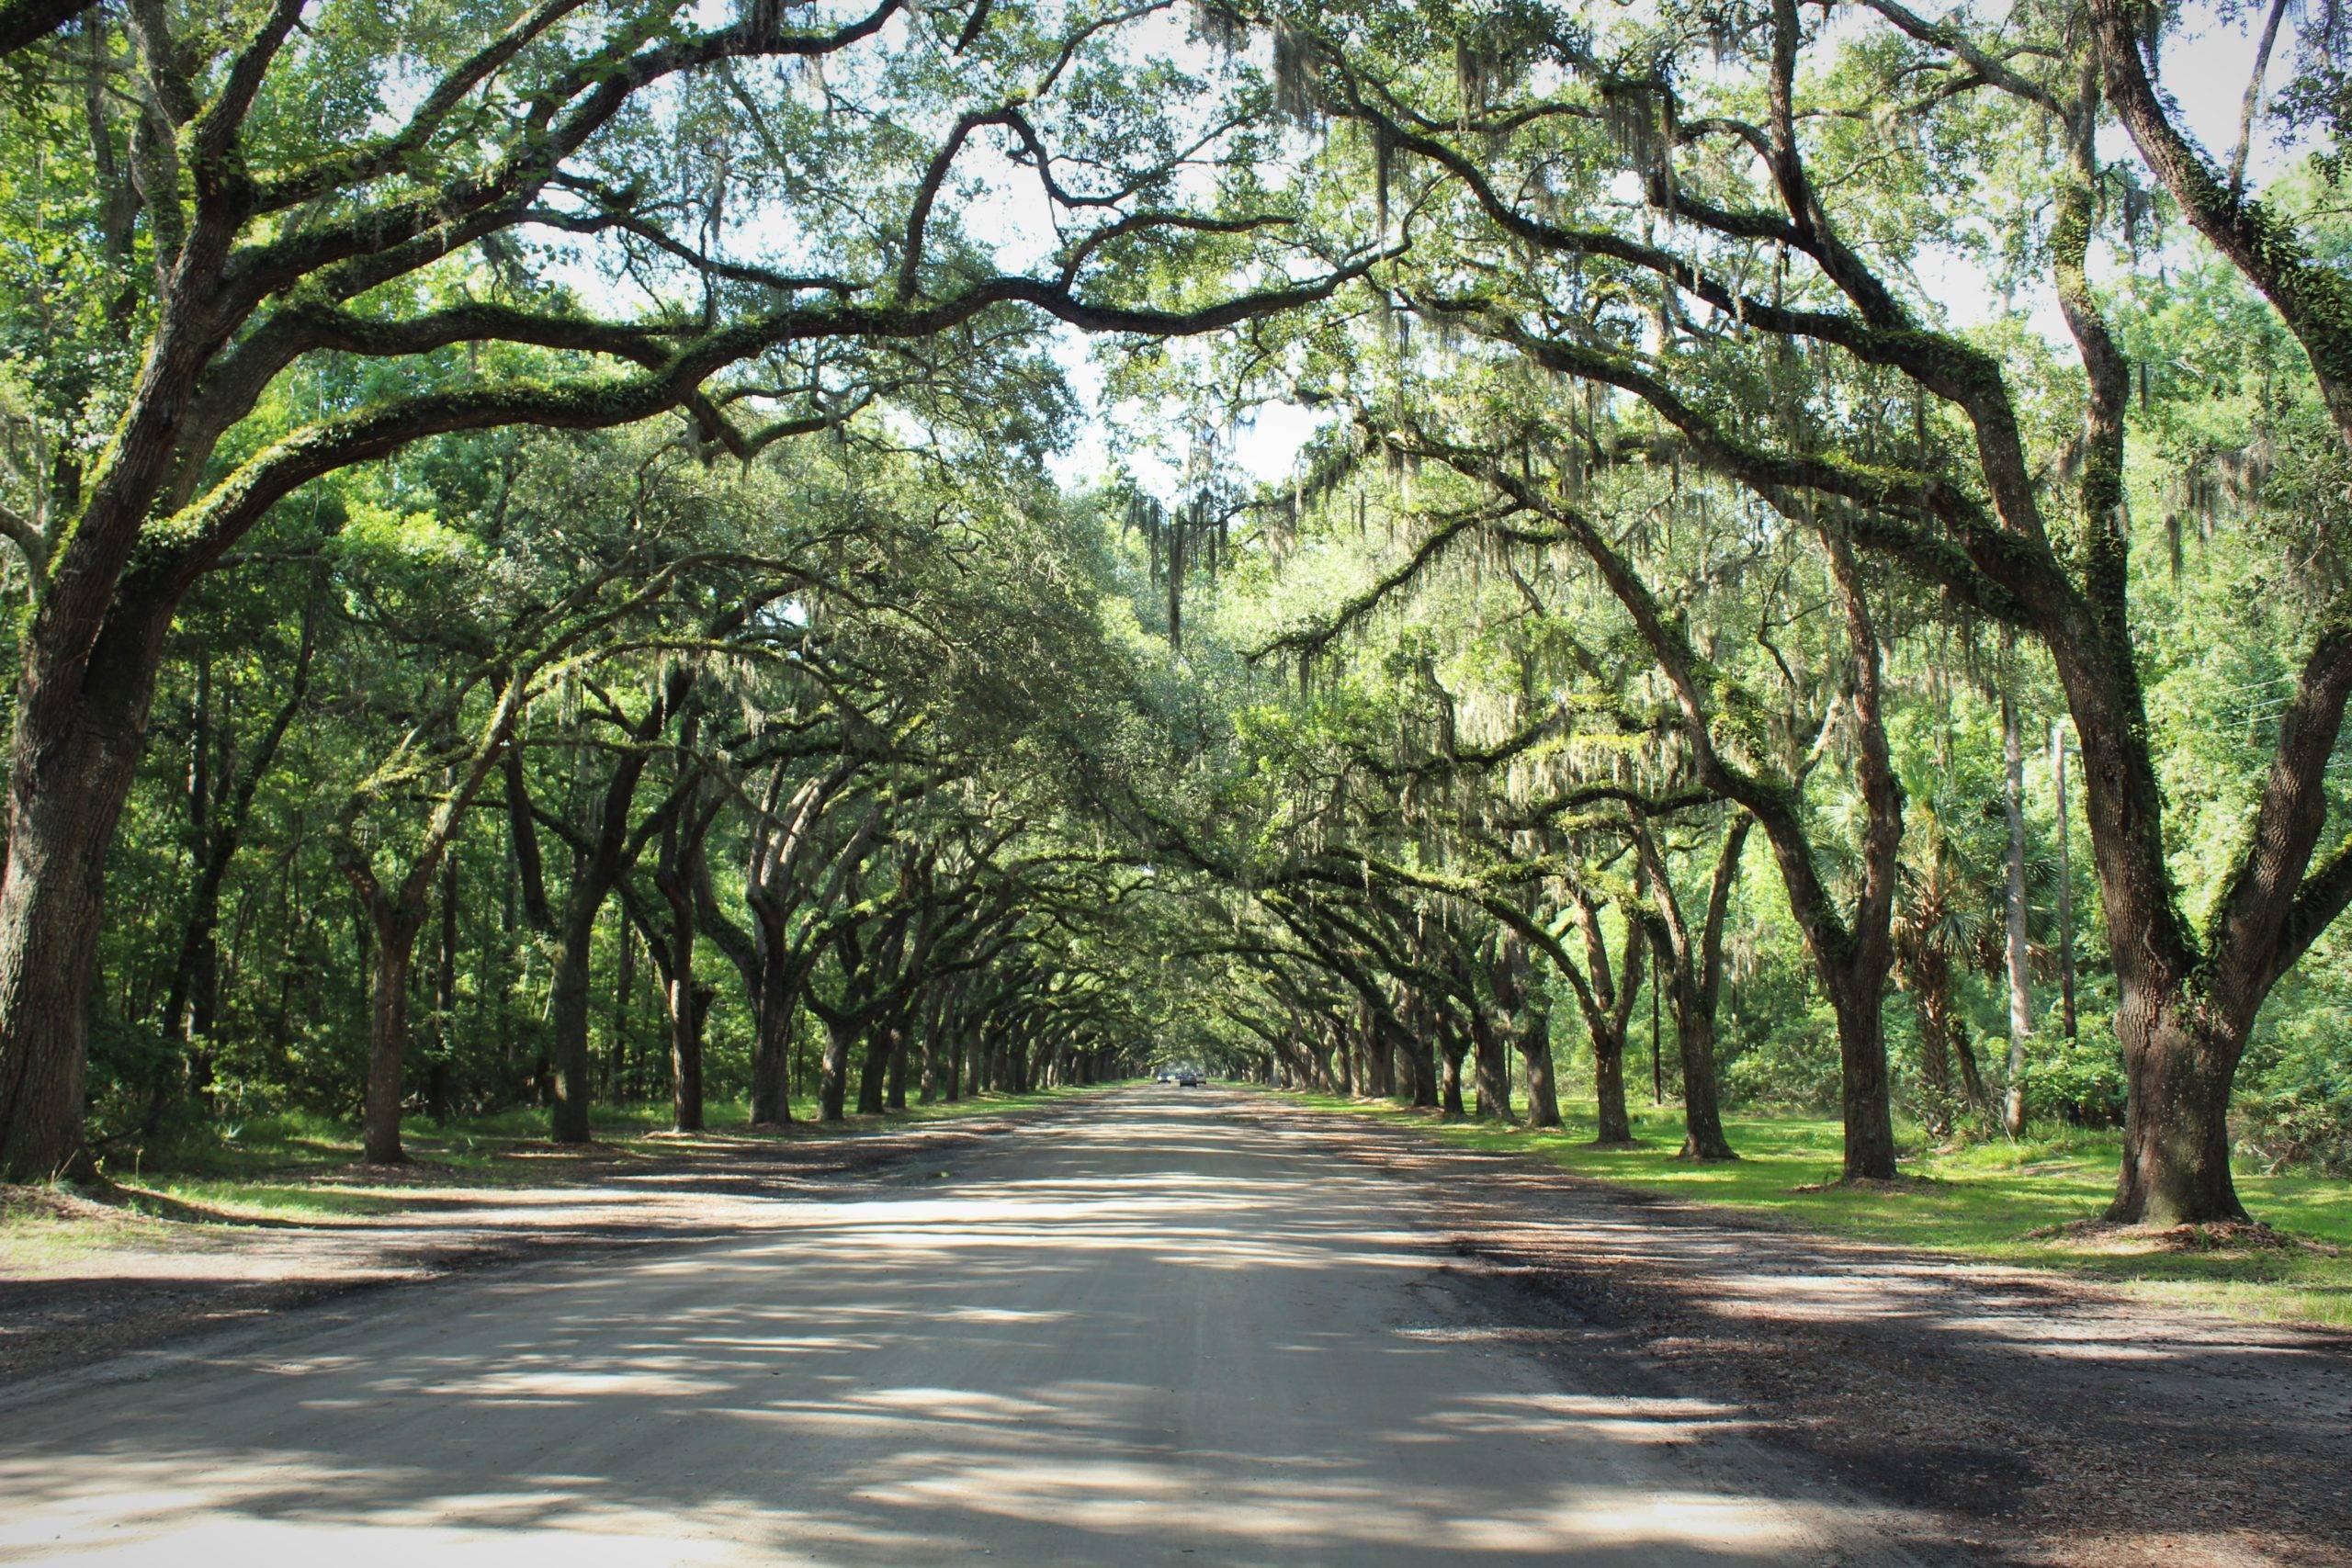 dirt road lined by oak trees